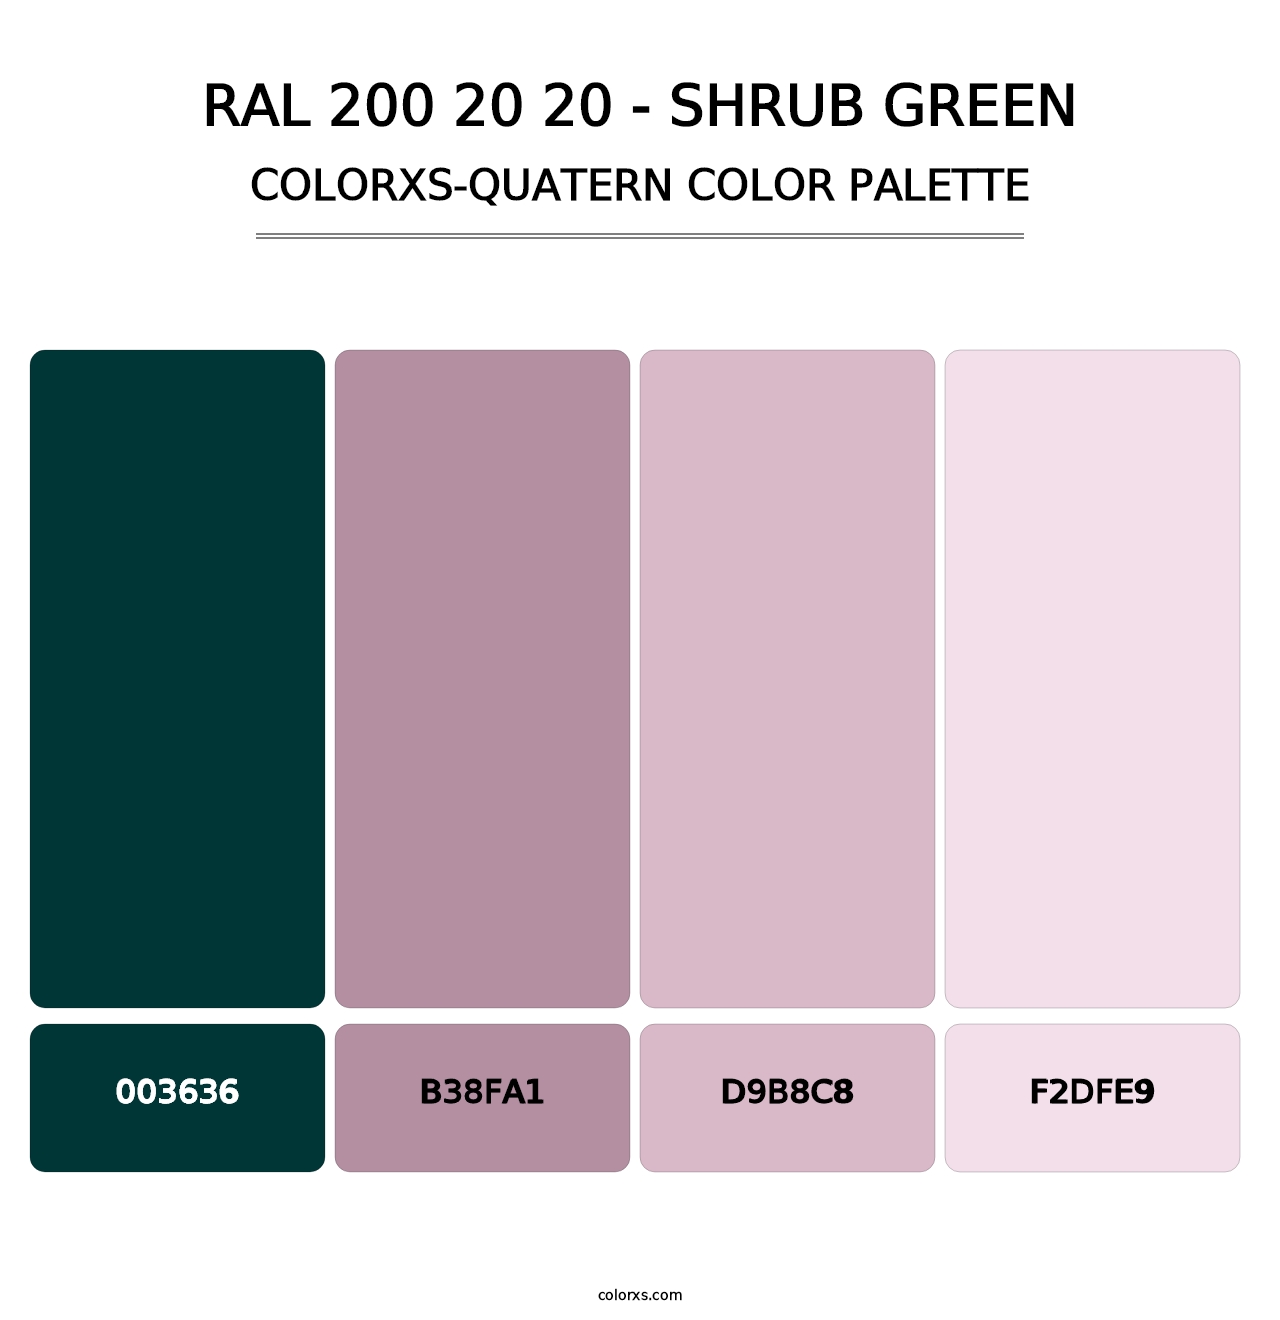 RAL 200 20 20 - Shrub Green - Colorxs Quatern Palette